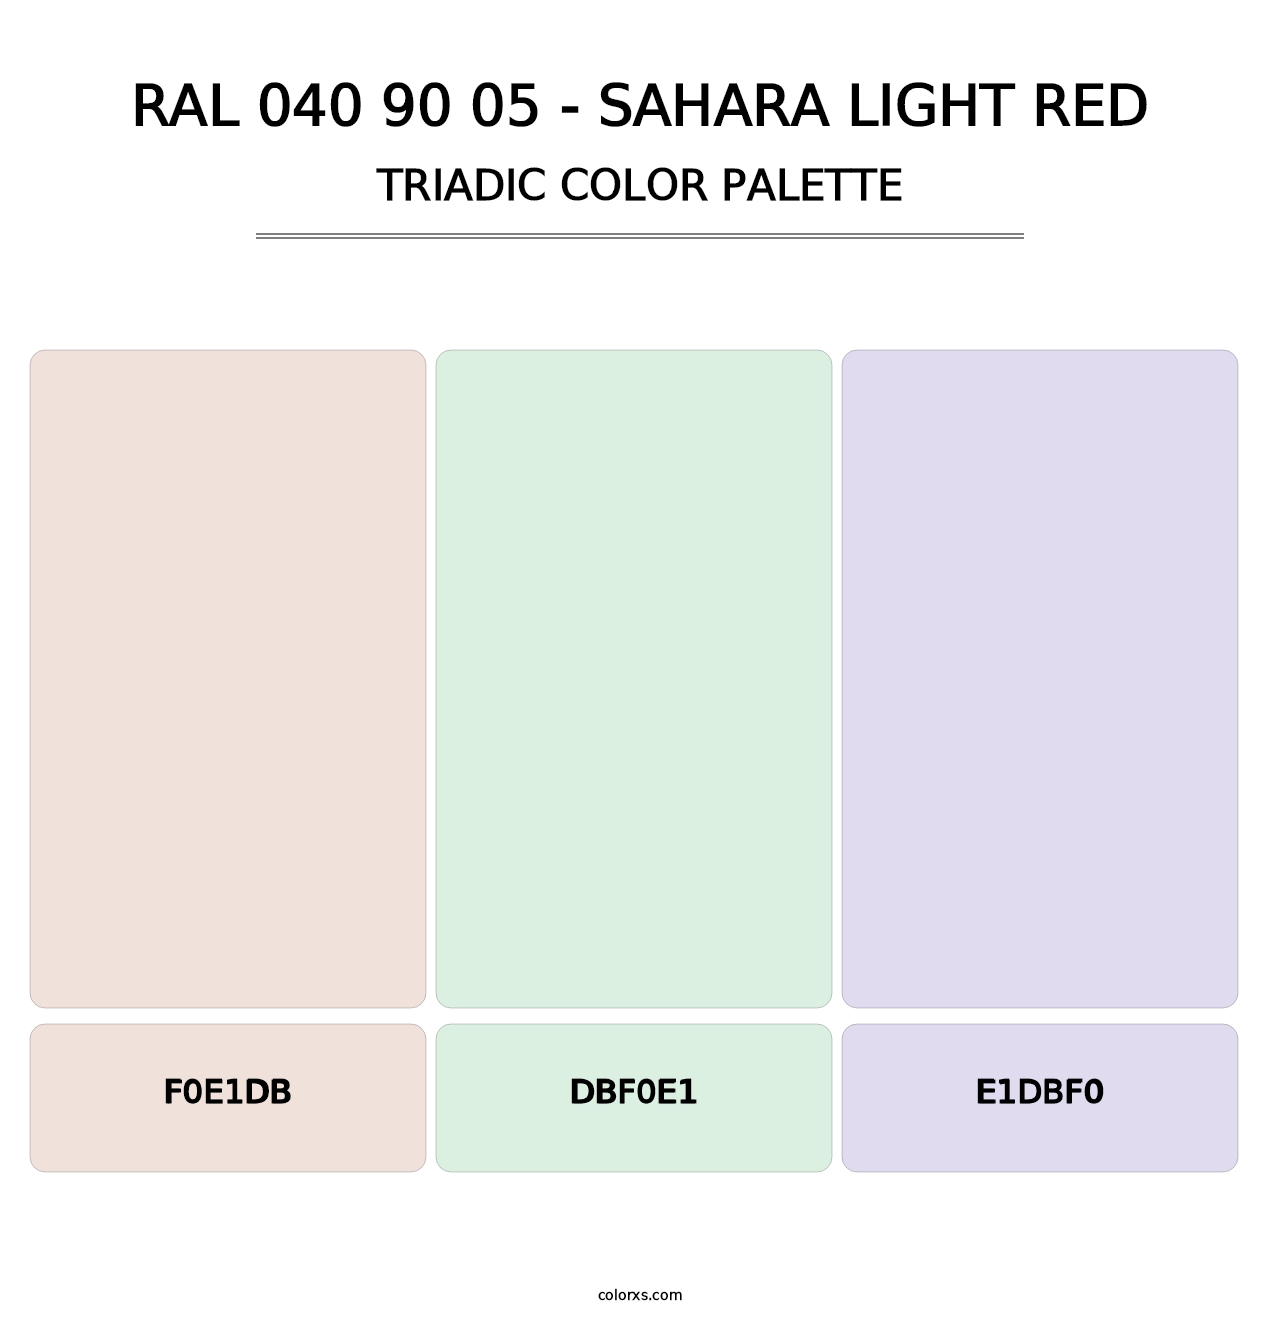 RAL 040 90 05 - Sahara Light Red - Triadic Color Palette